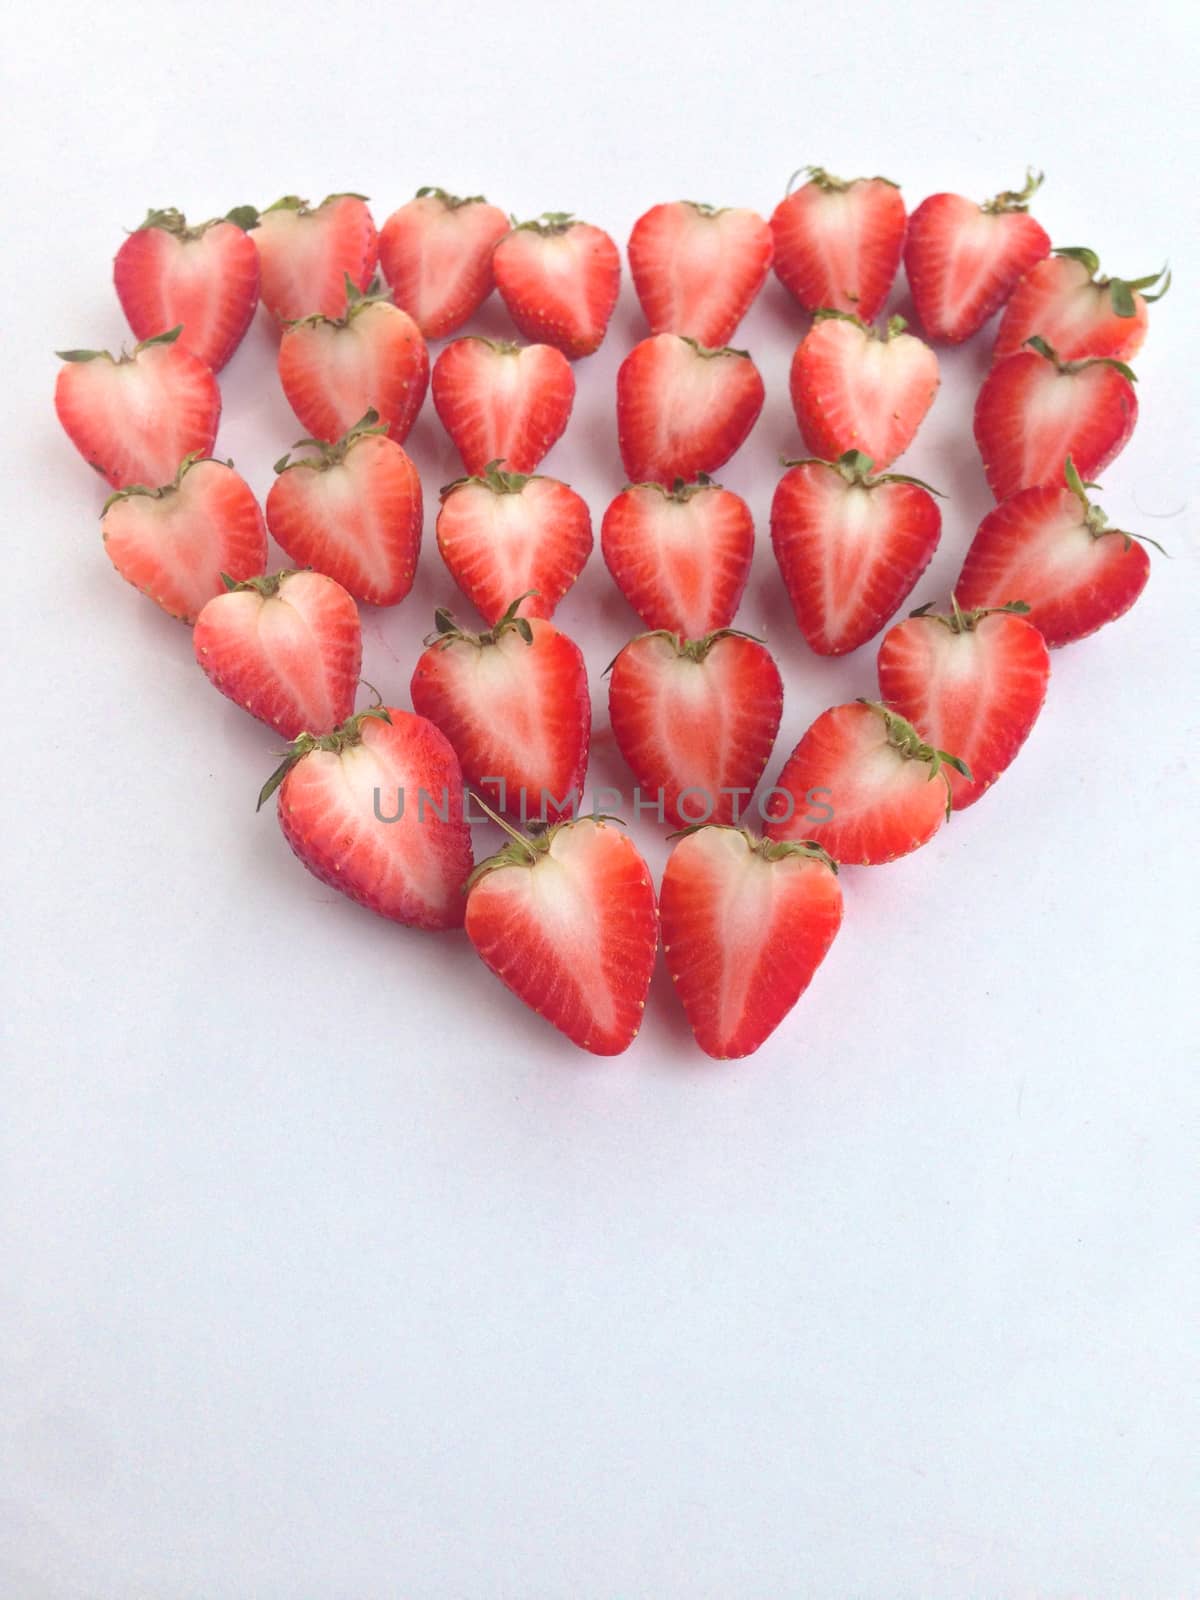 strawberry heart shaped by Bowonpat